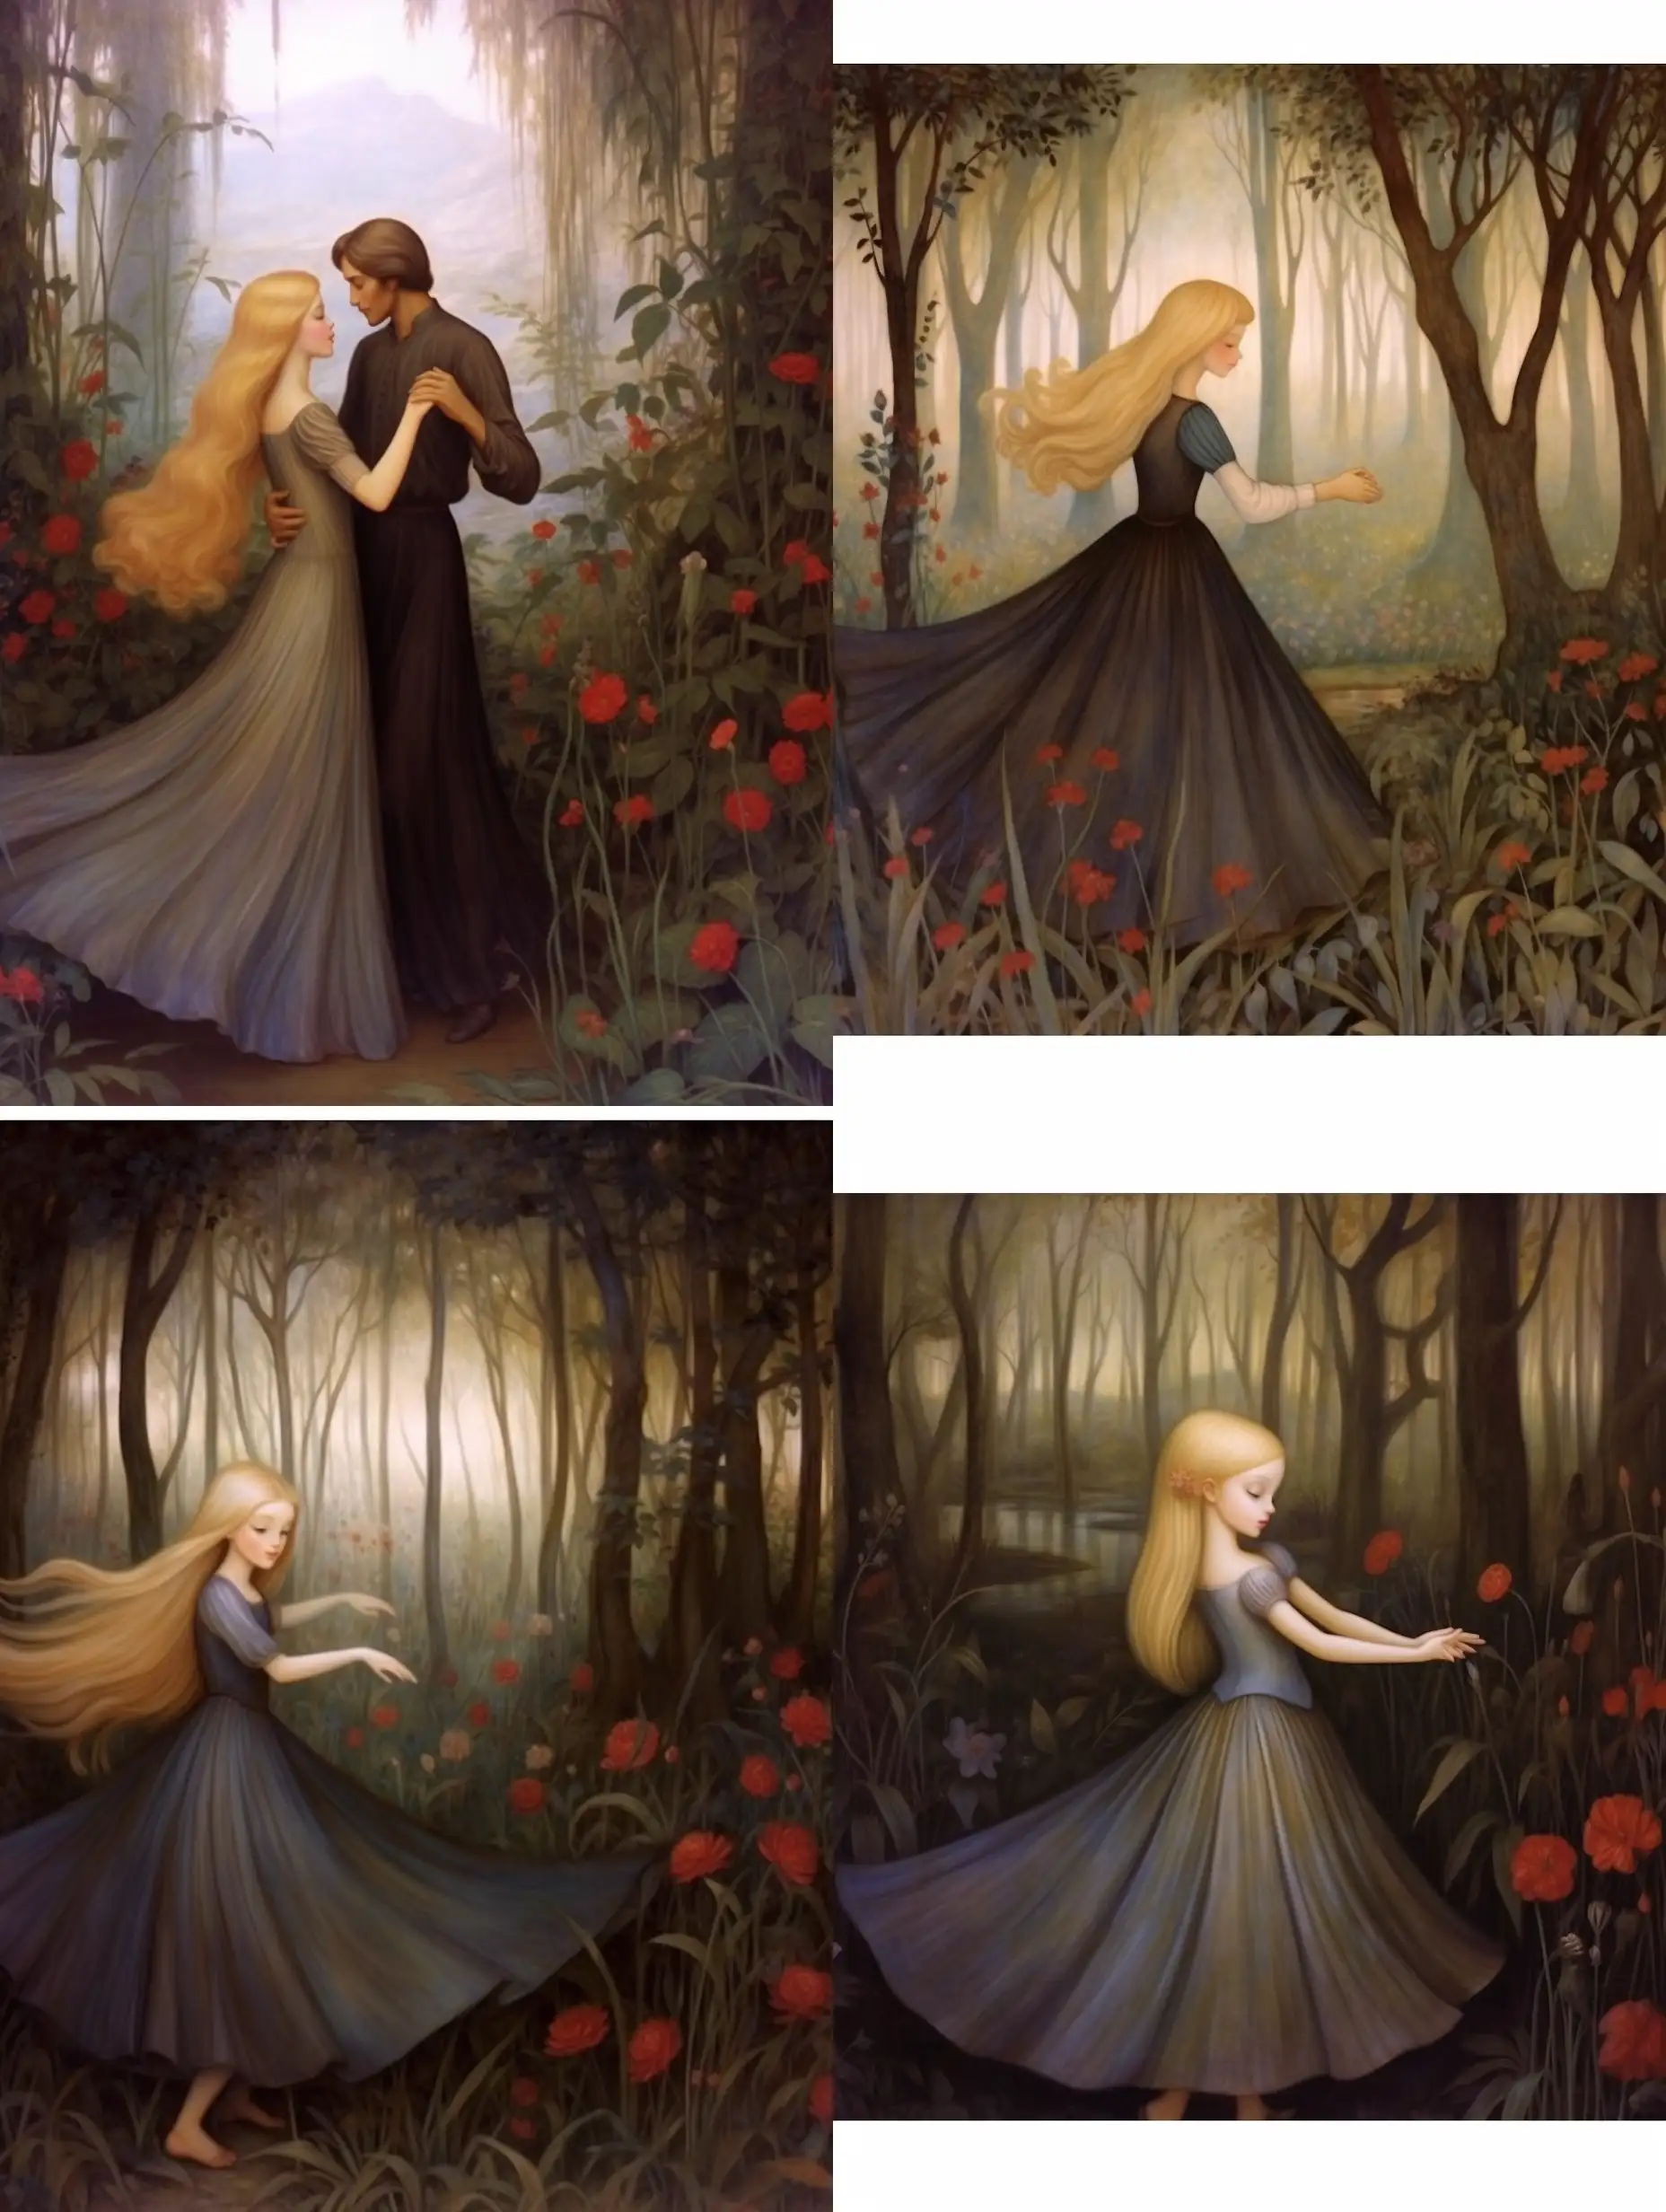 Graceful-Blonde-Dancer-in-Red-Skirt-Amidst-Botanical-Splendor